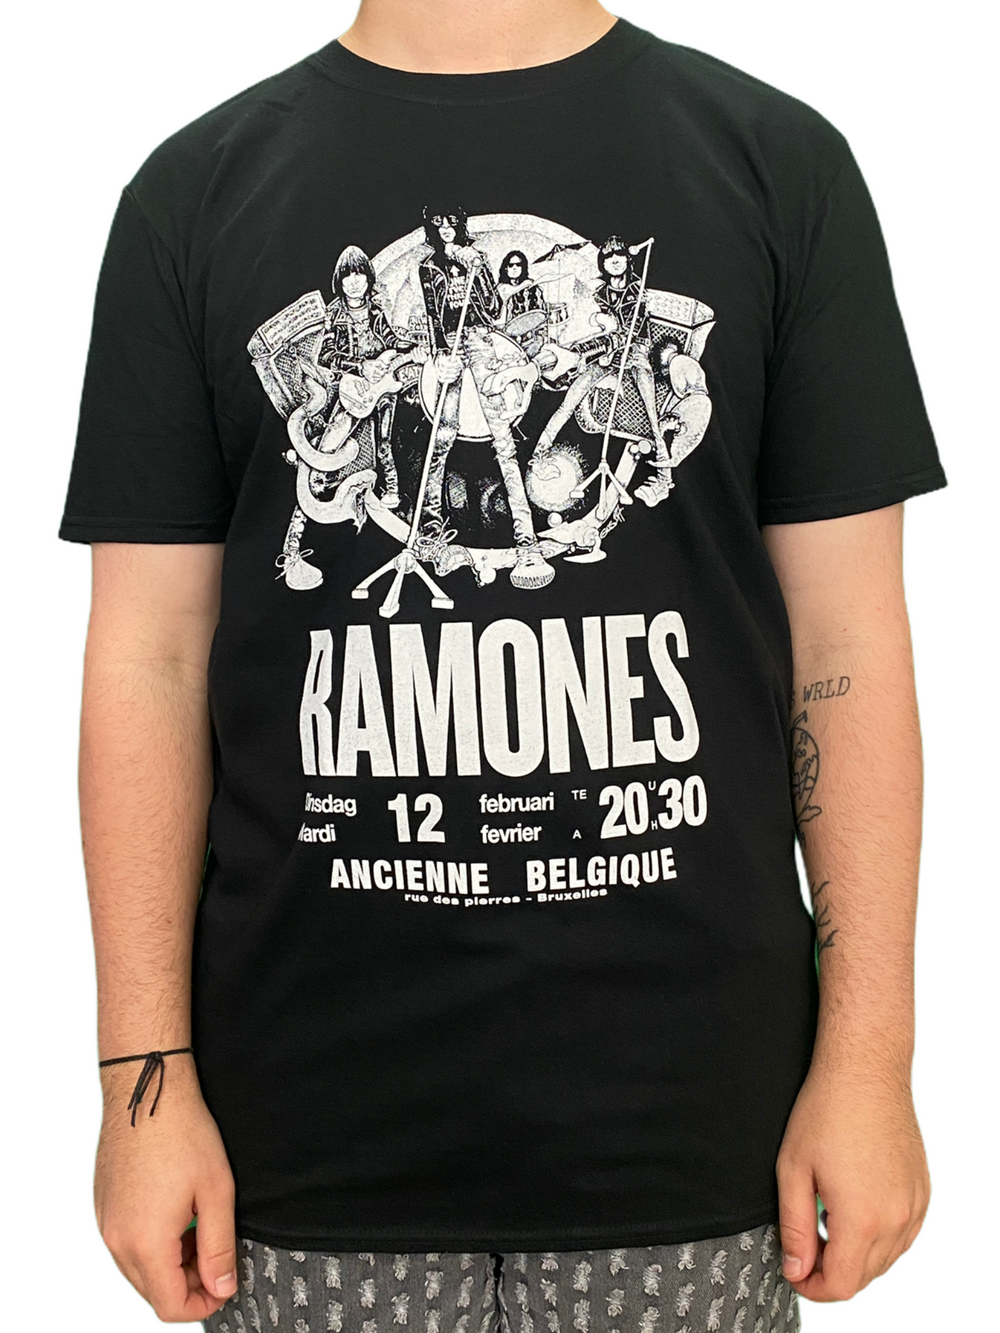 Ramones The - Belguique Unisex Official T Shirt Brand New Various Sizes